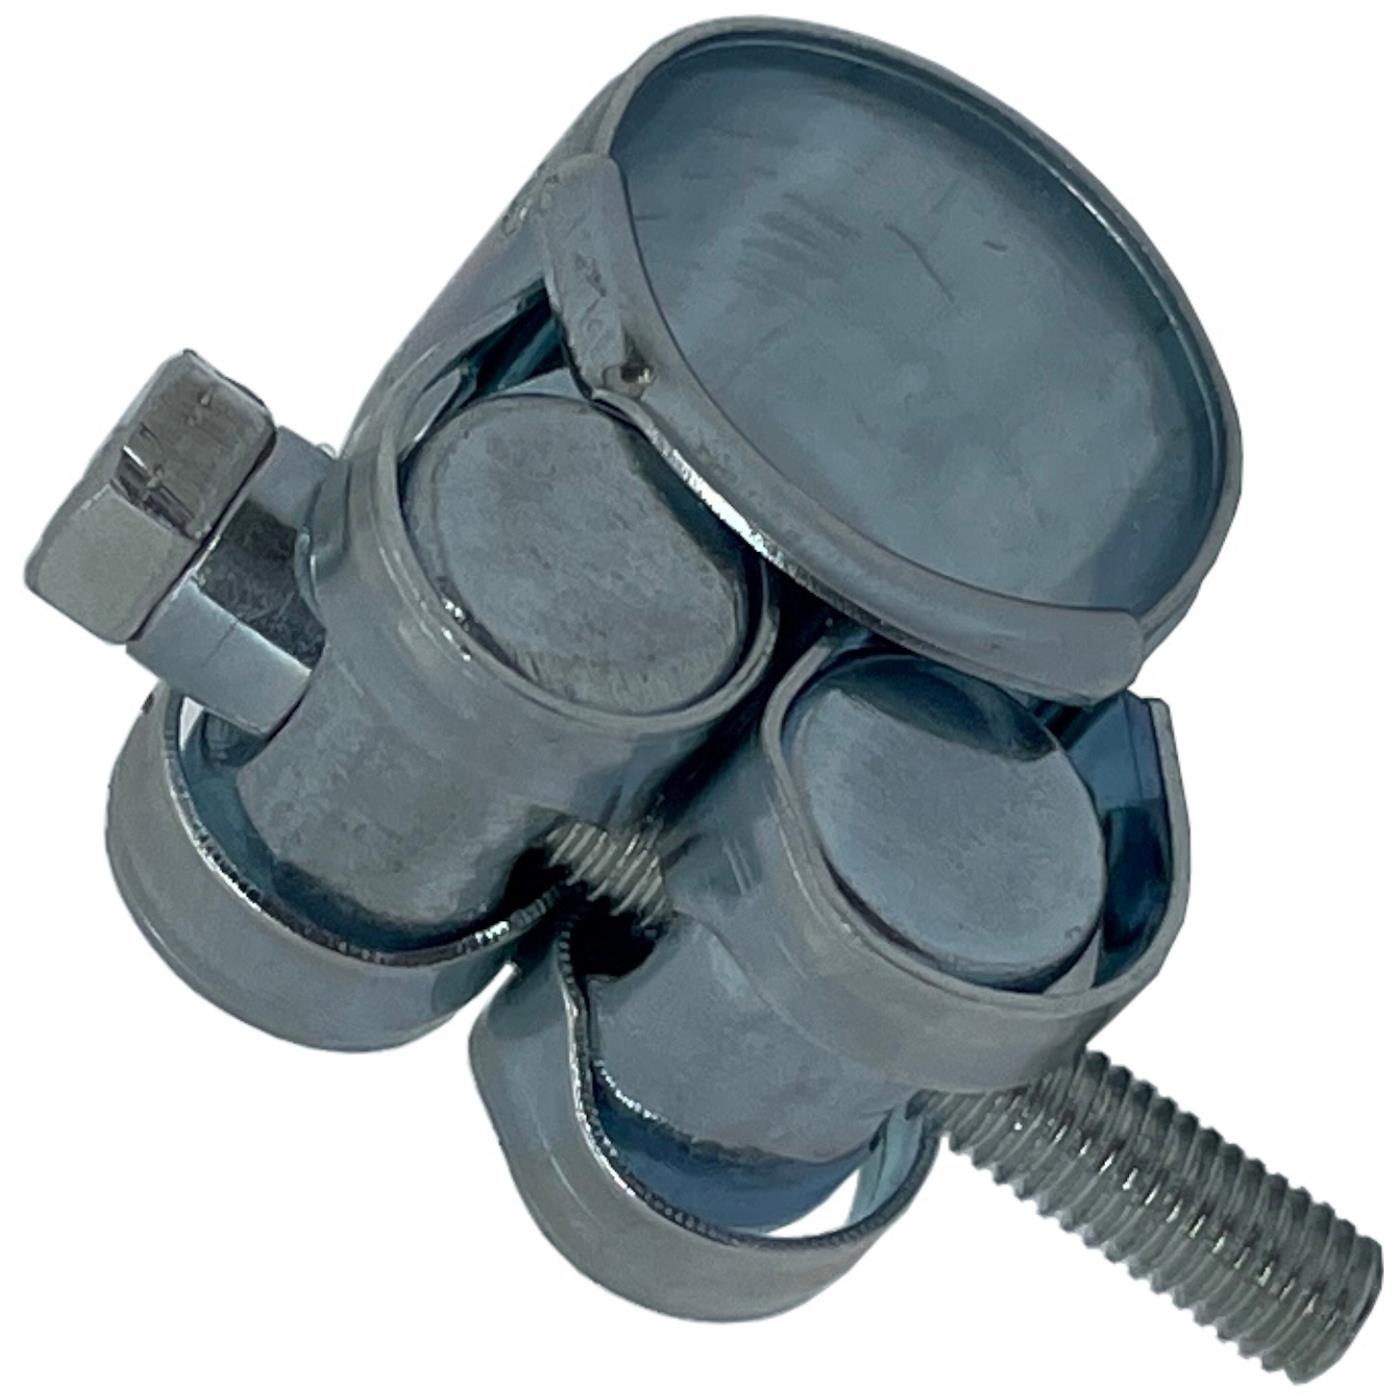 1x Lumonic Hinge pin clamp 26-28mm Galvanised Exhaust clamp for construction cars trucks